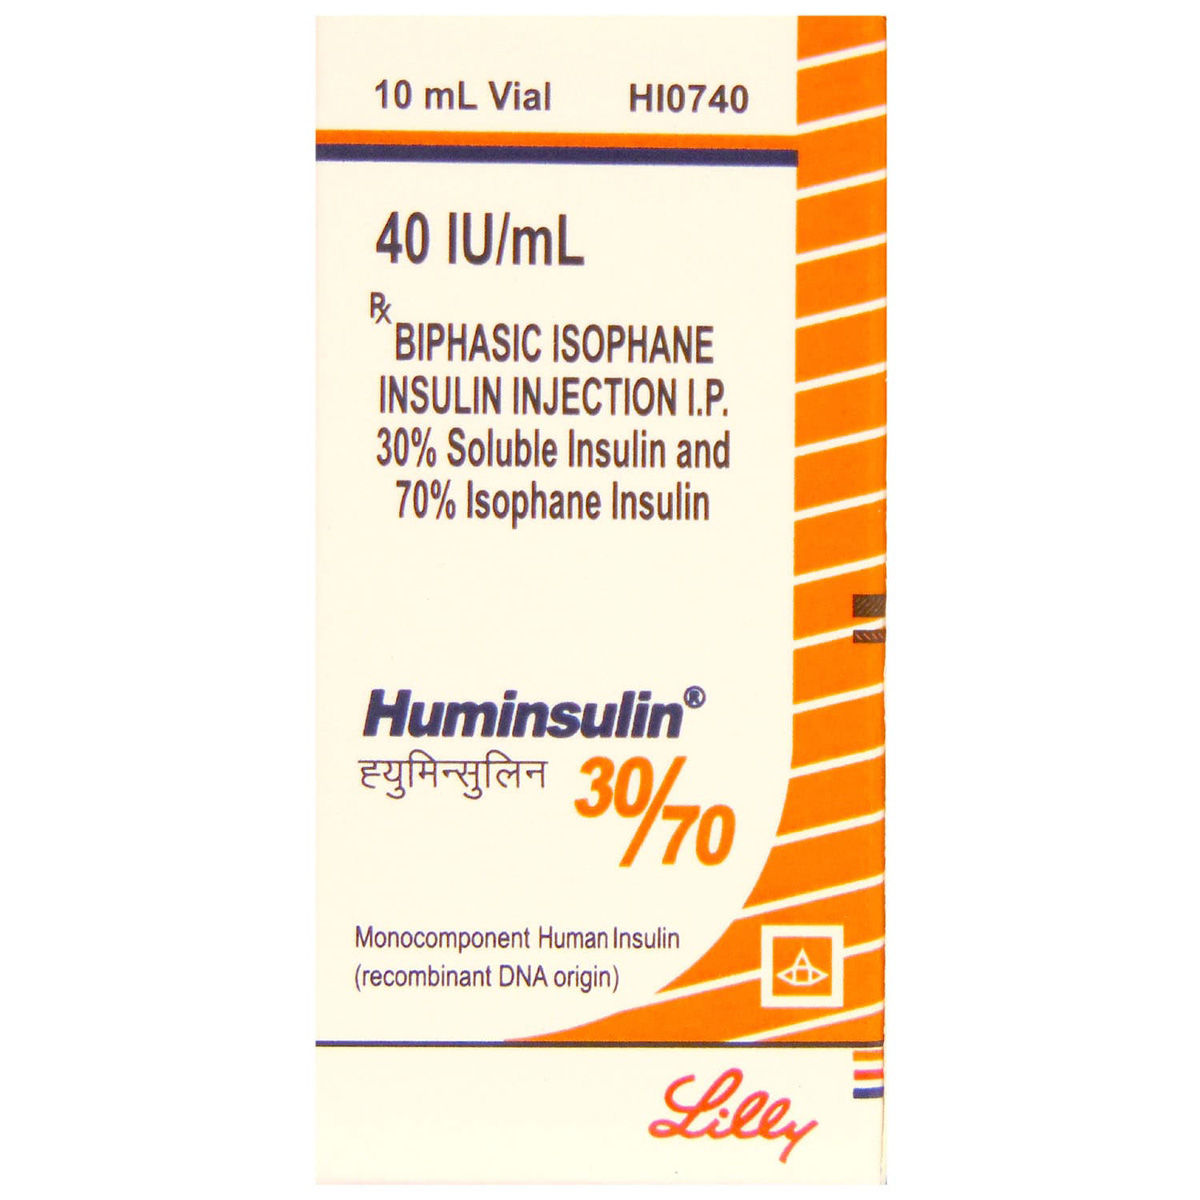 Buy Huminsulin 30/70 Injection 40 IU/ml Online